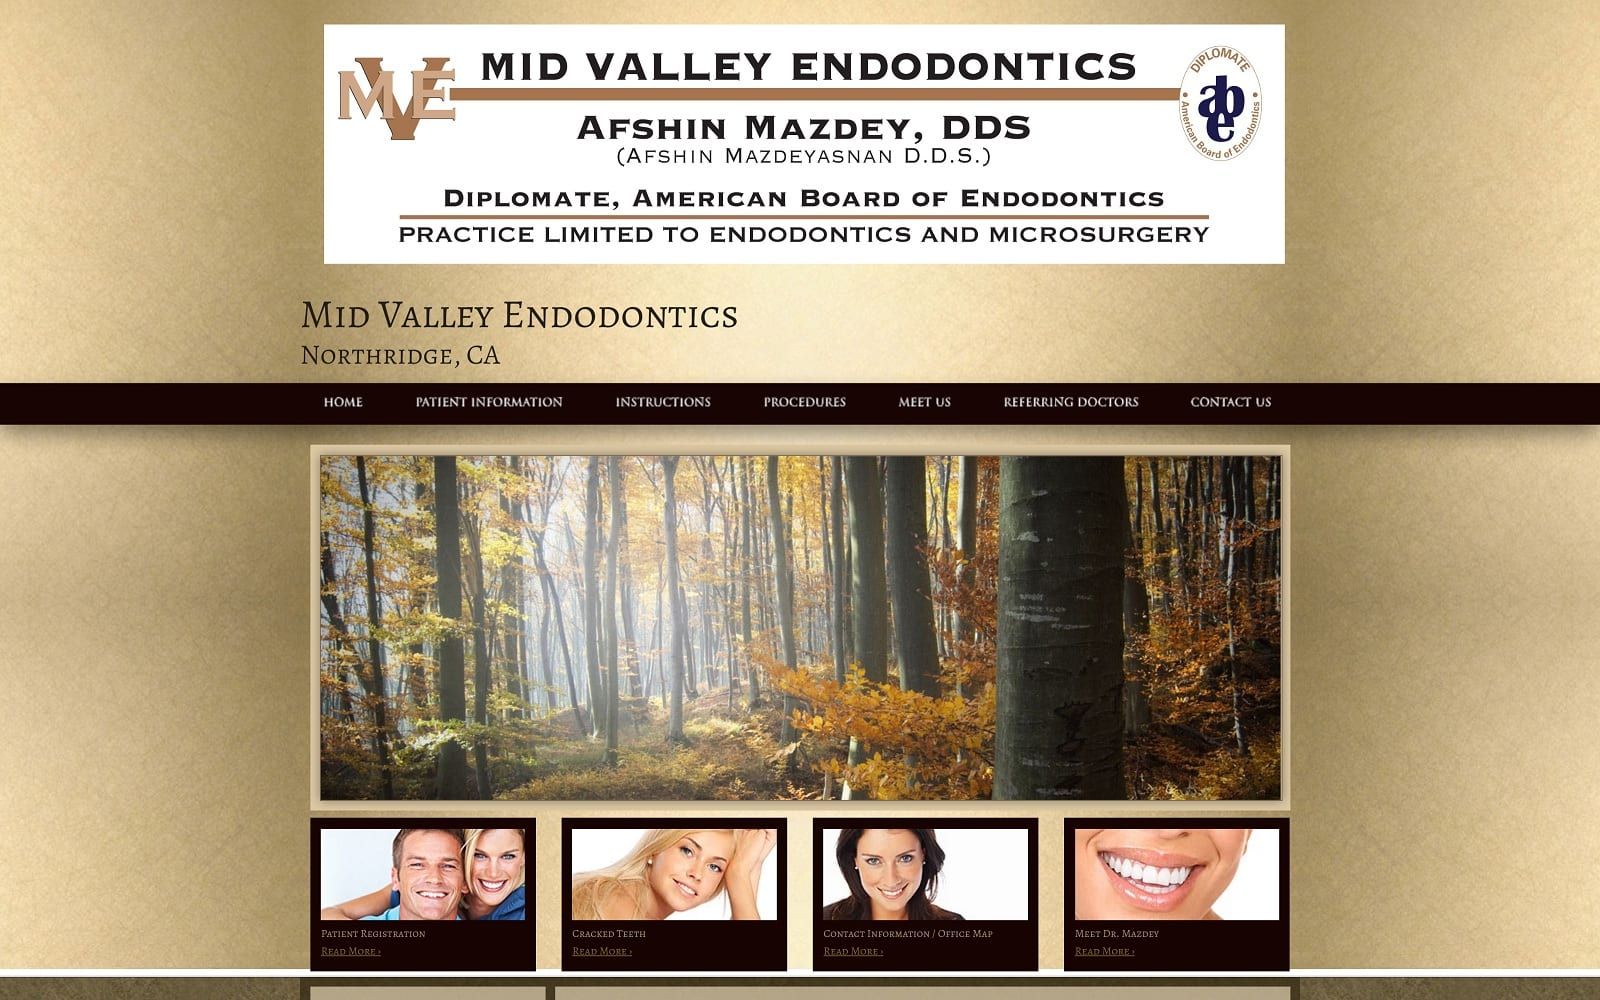 The screenshot of mid valley endodontics midvalleyendo. Com website